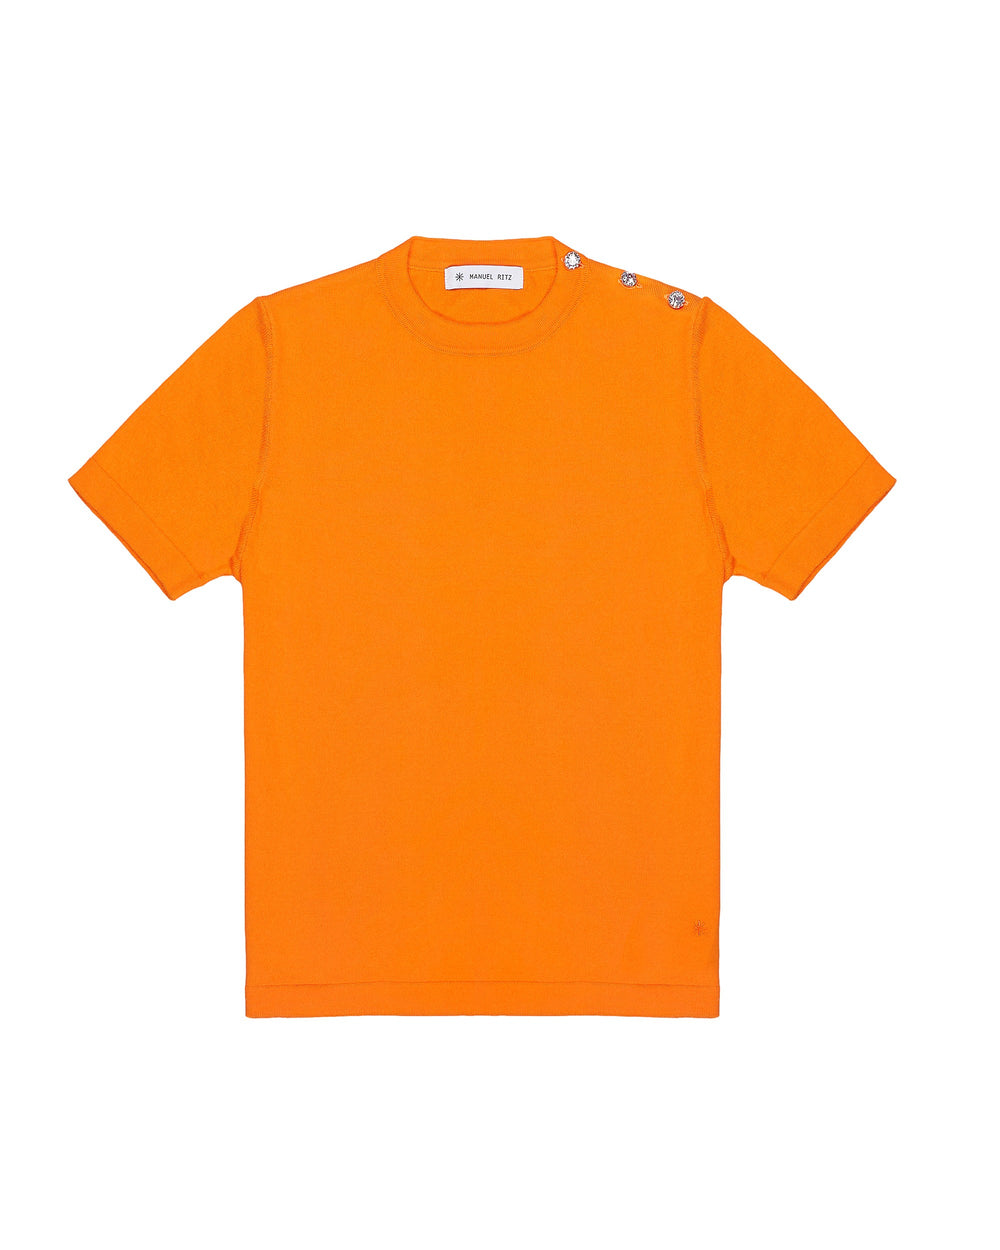 orange jewel detail cotton jersey